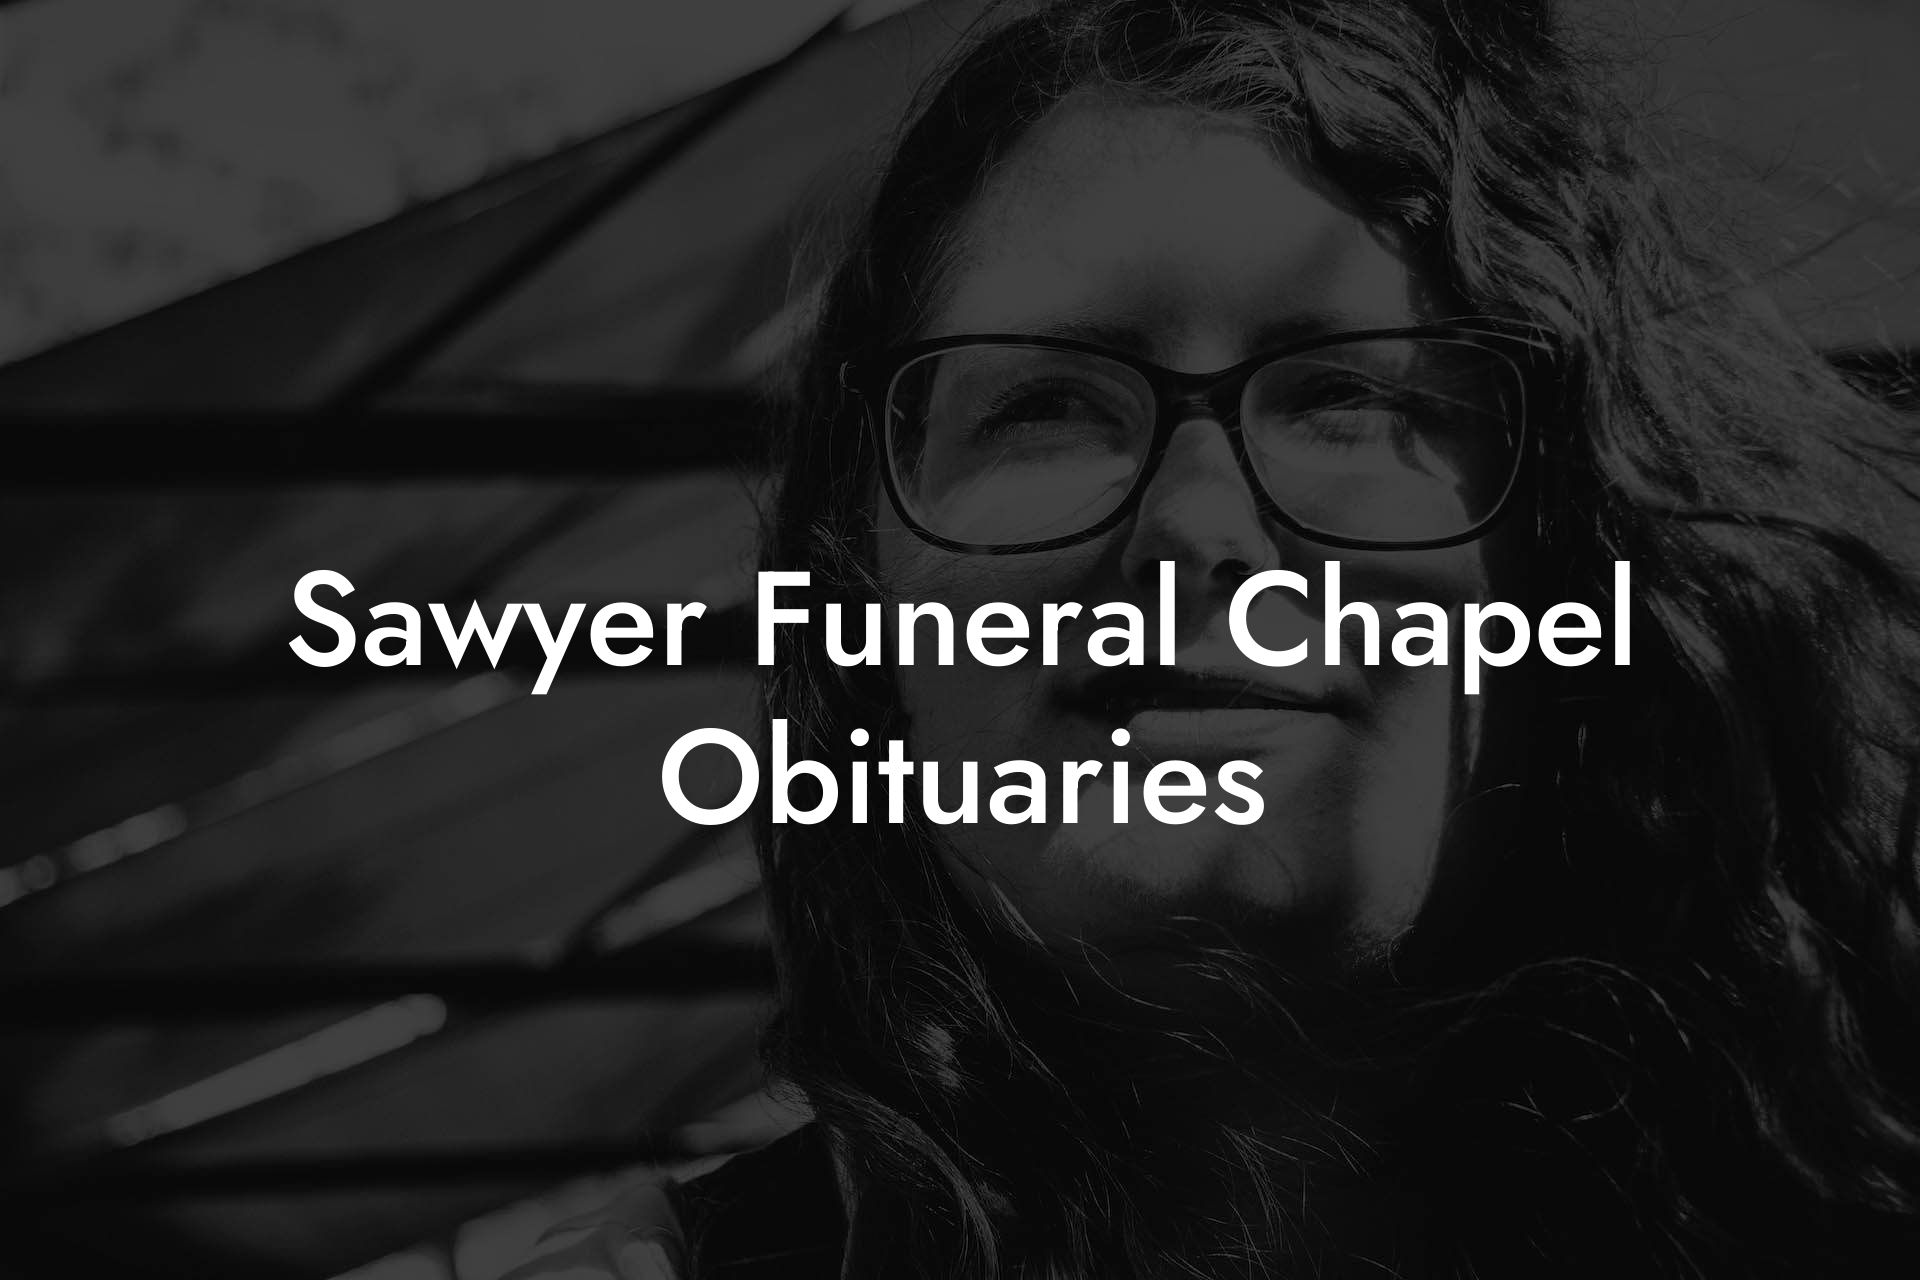 Sawyer Funeral Chapel Obituaries